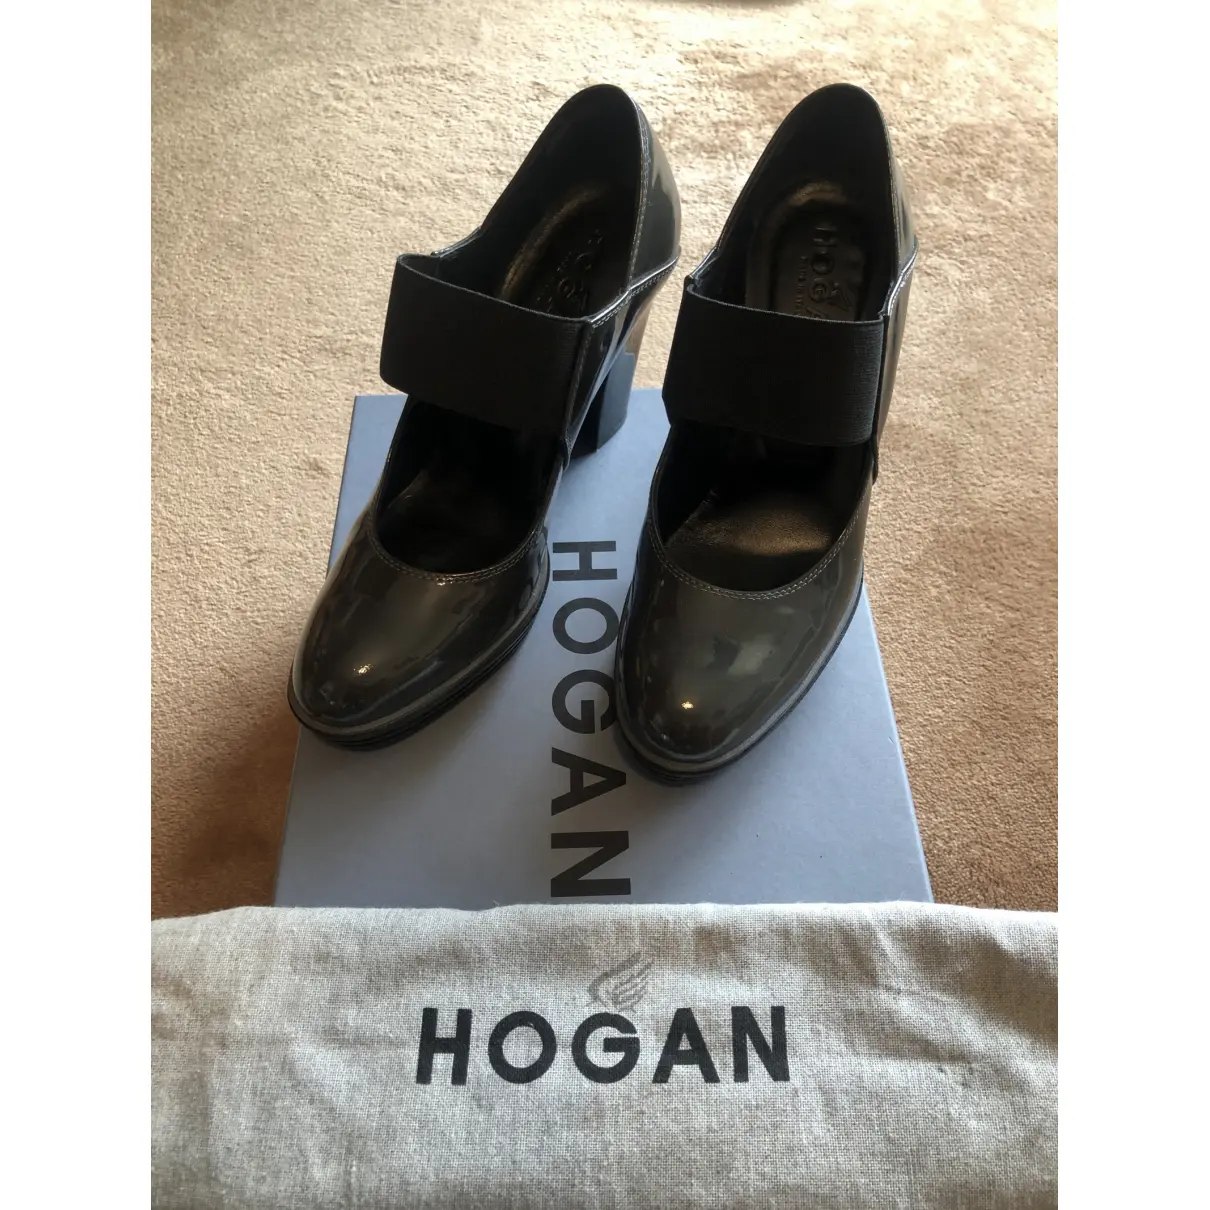 Patent leather heels Hogan